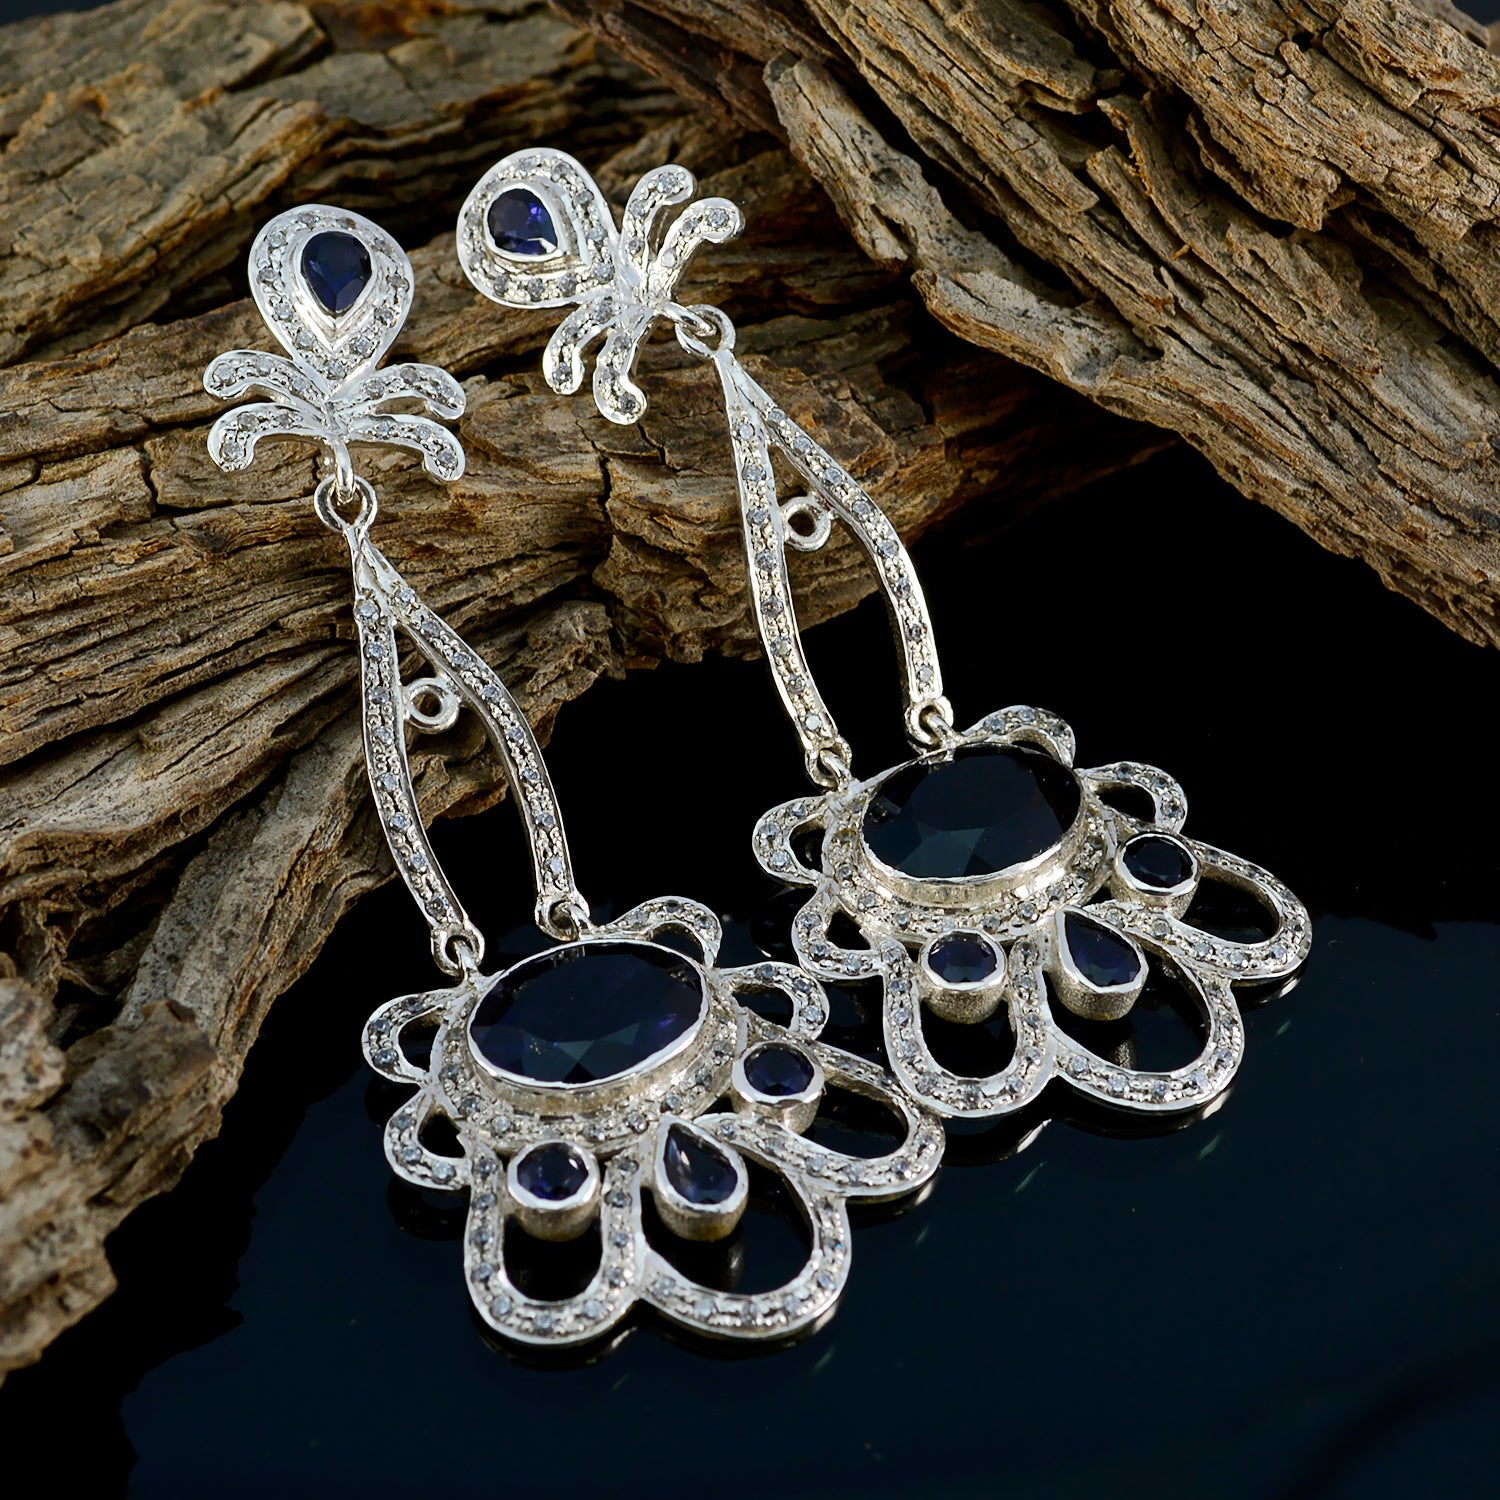 Riyo Natural Gemstone multi shape Faceted Nevy Blue Iolite Silver Earrings st. patricks day gift